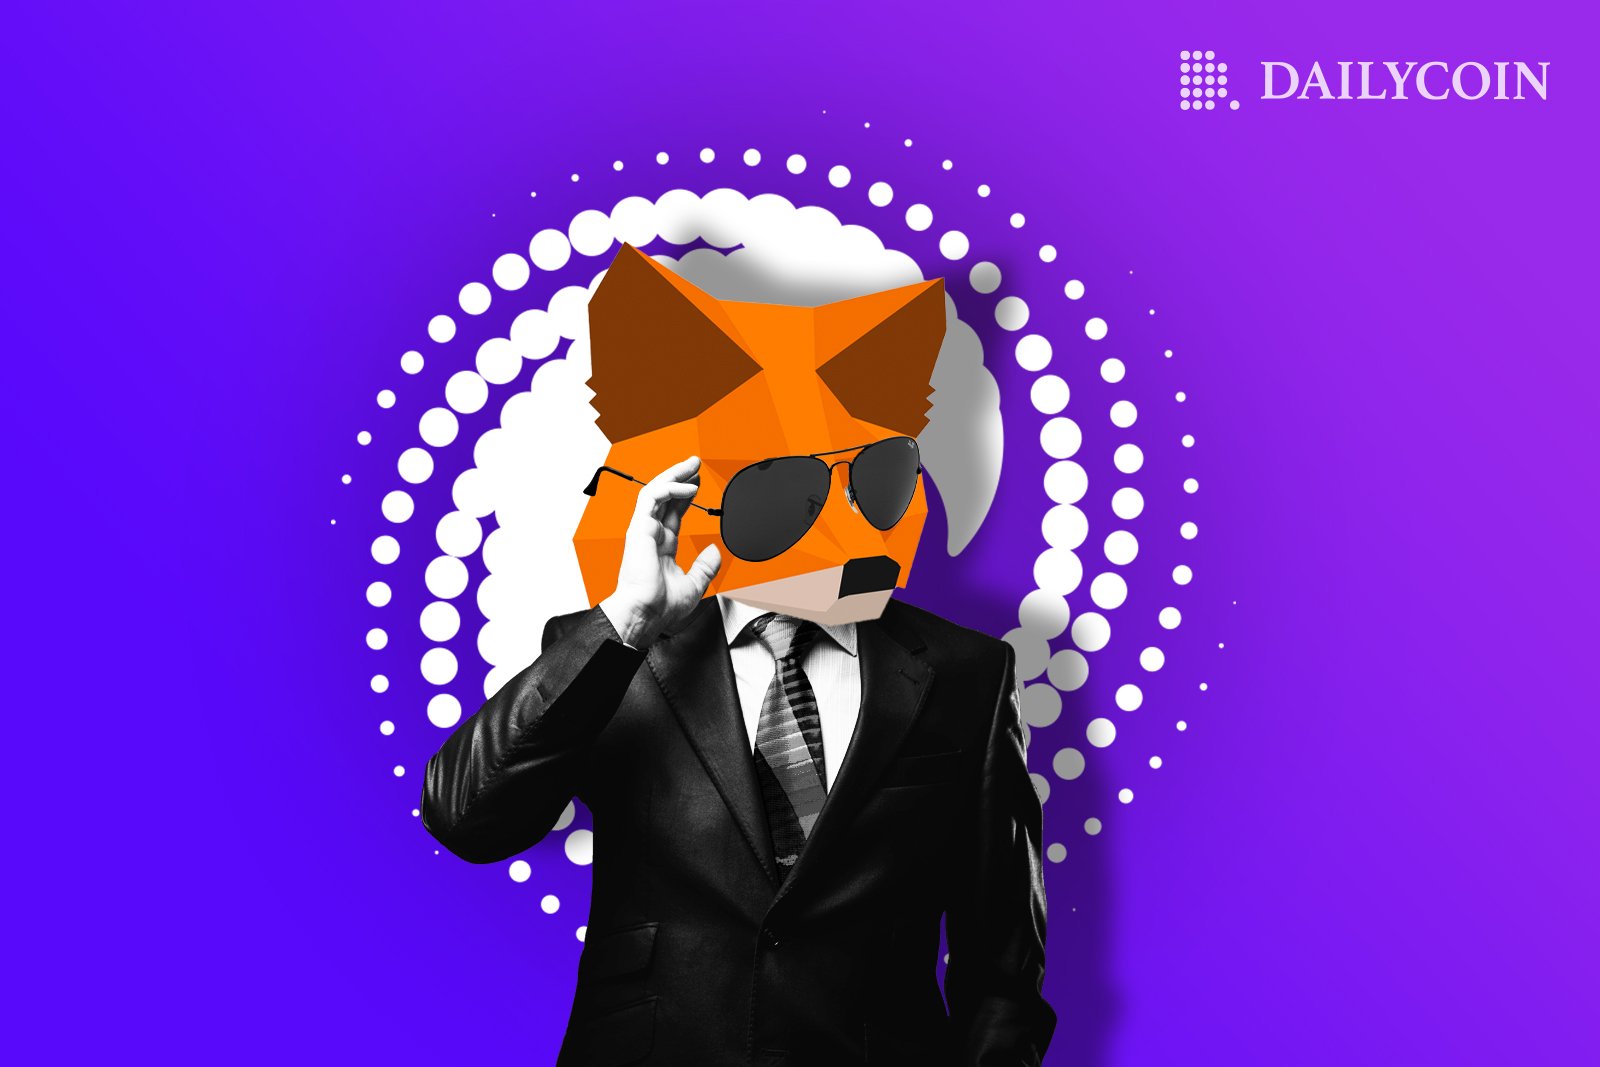 Human wearing Metamask logo fox with sunglasses as a mask